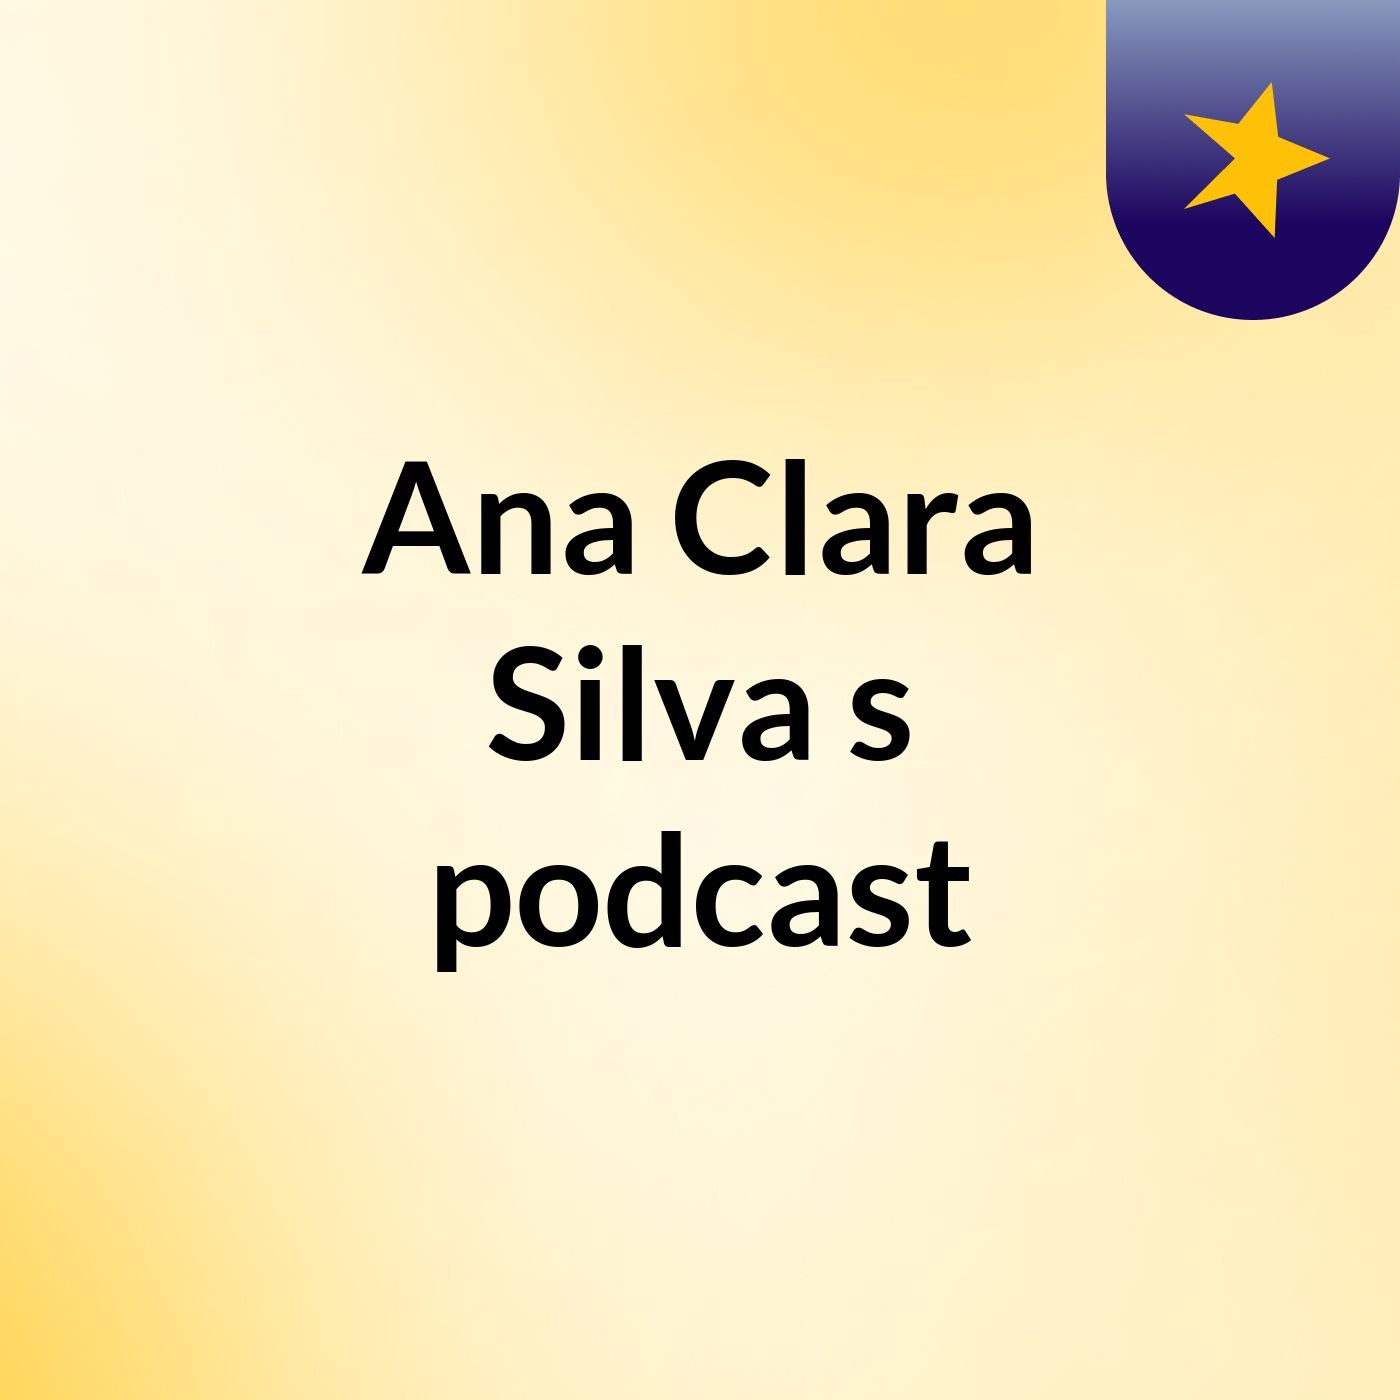 Ana Clara Silva's podcast